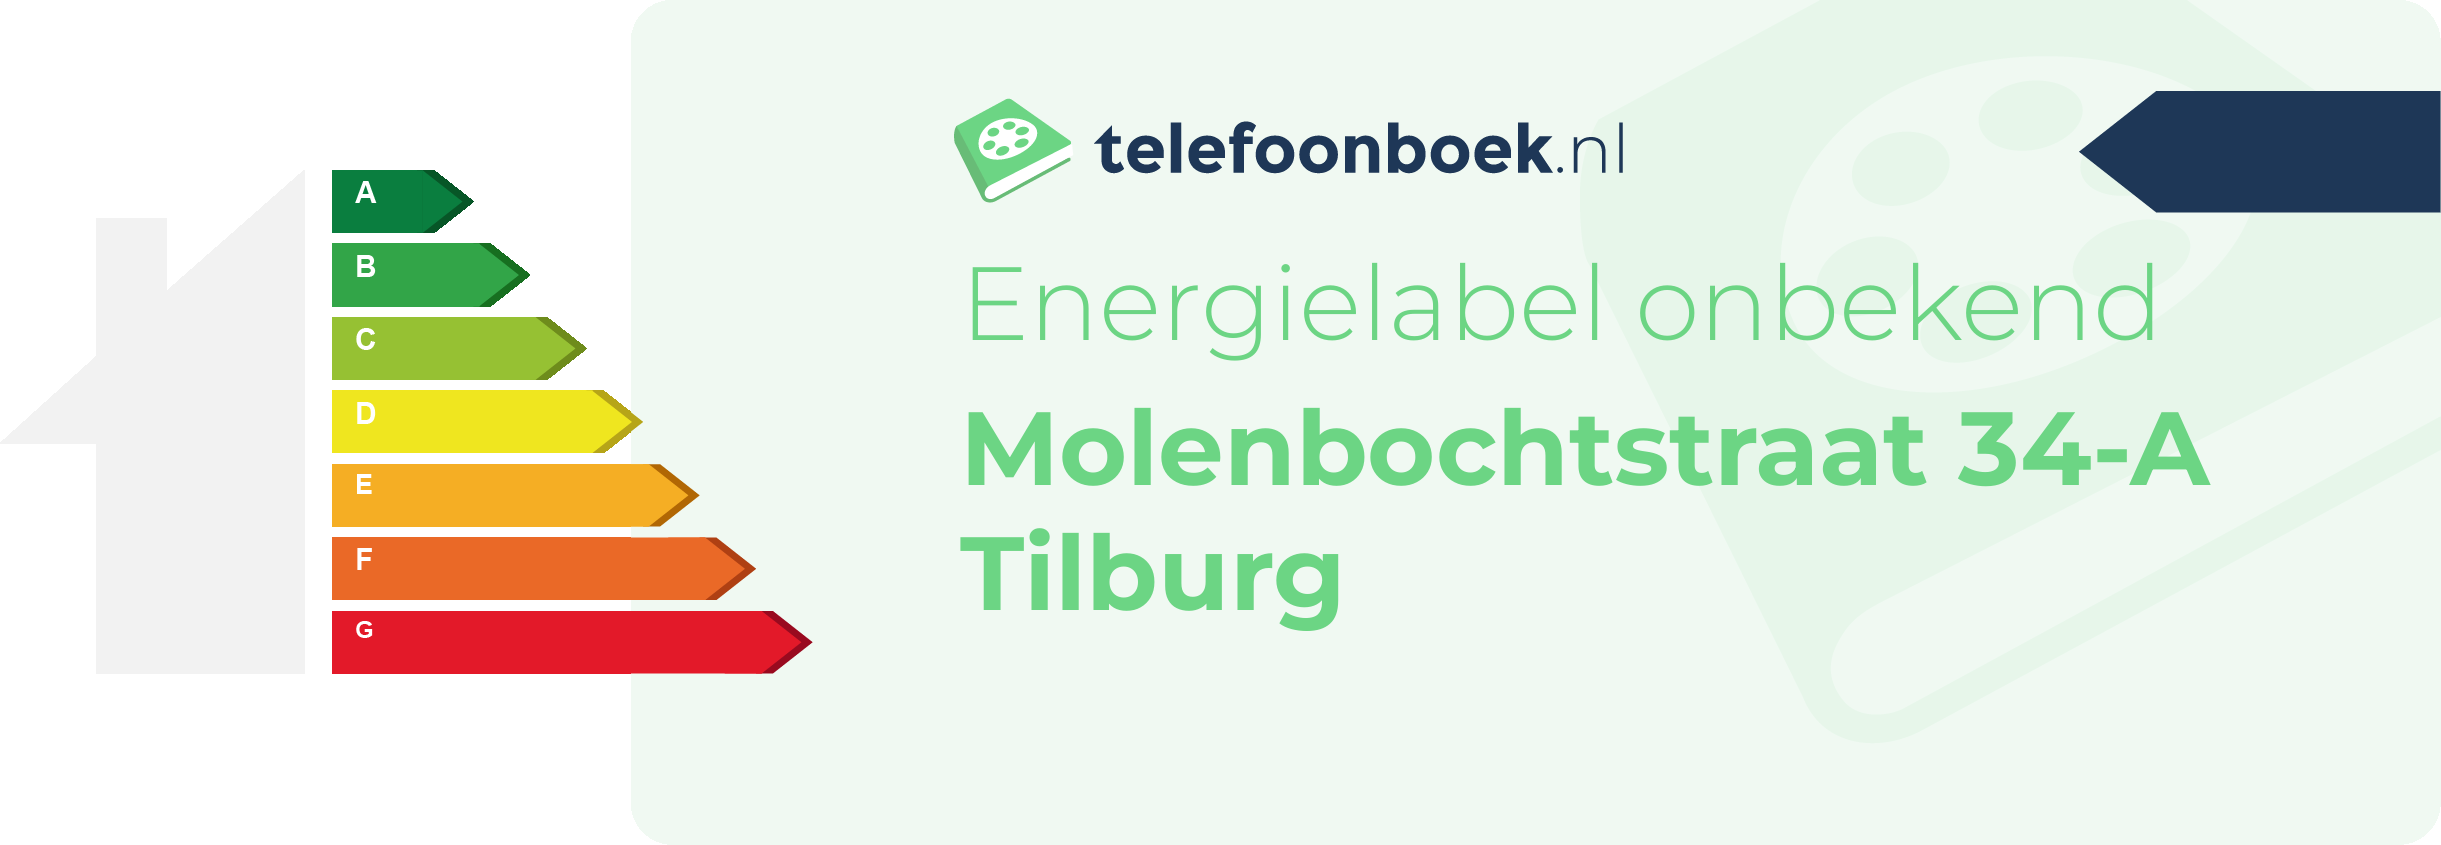 Energielabel Molenbochtstraat 34-A Tilburg